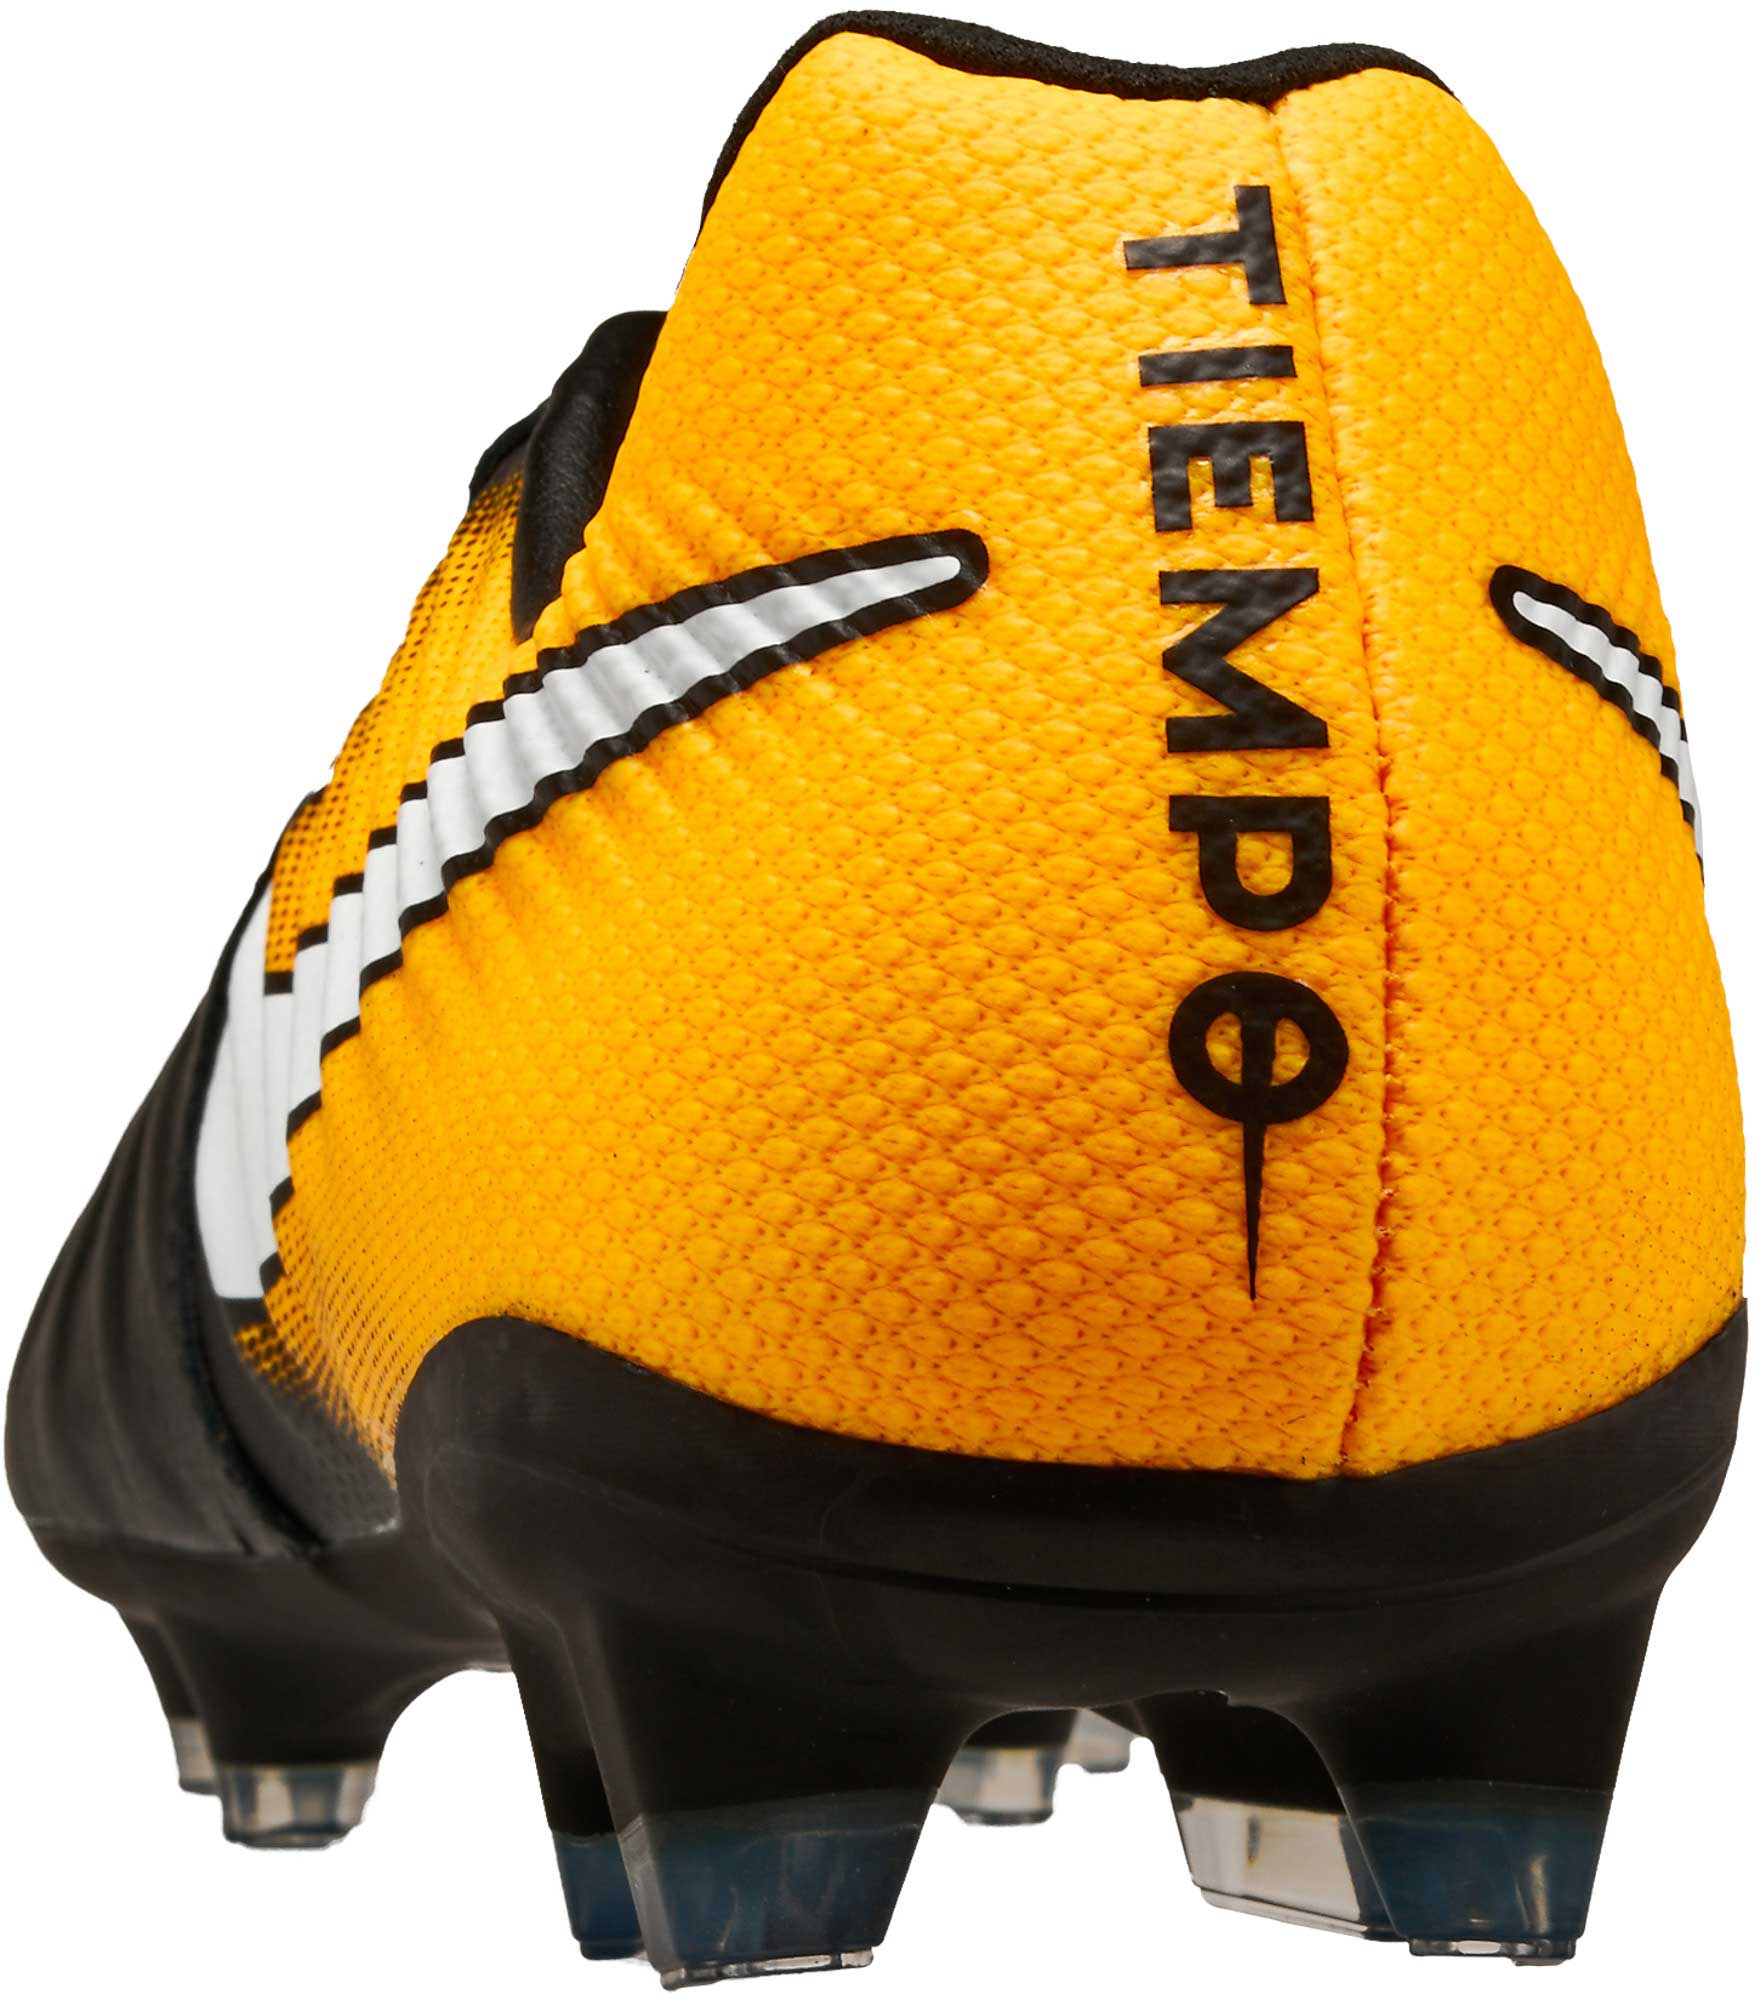 Nike Tiempo Legacy FG Soccer Cleats - Black & White - Soccer Master